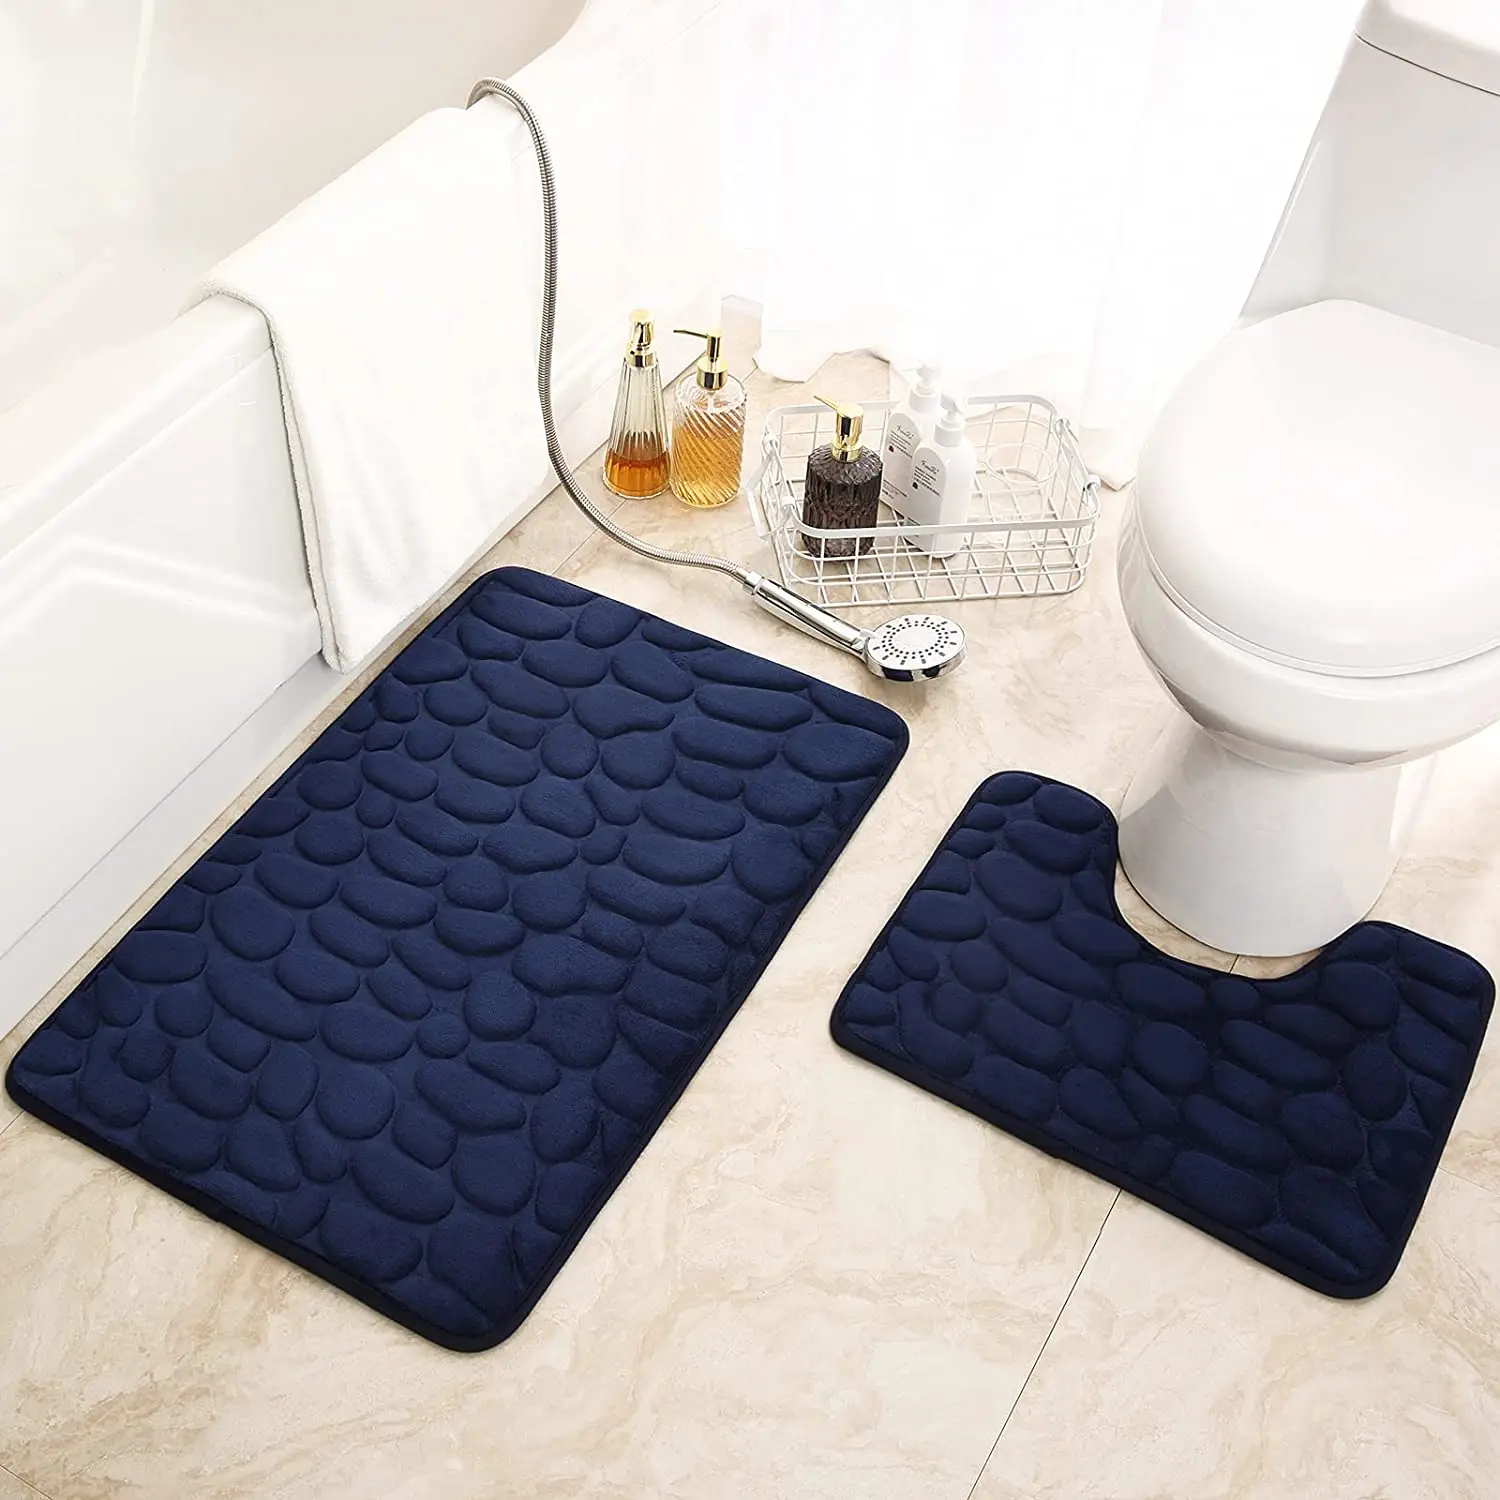 Customized Memory Foam Bath Mat Cobblestone Bathroom Rugs Super